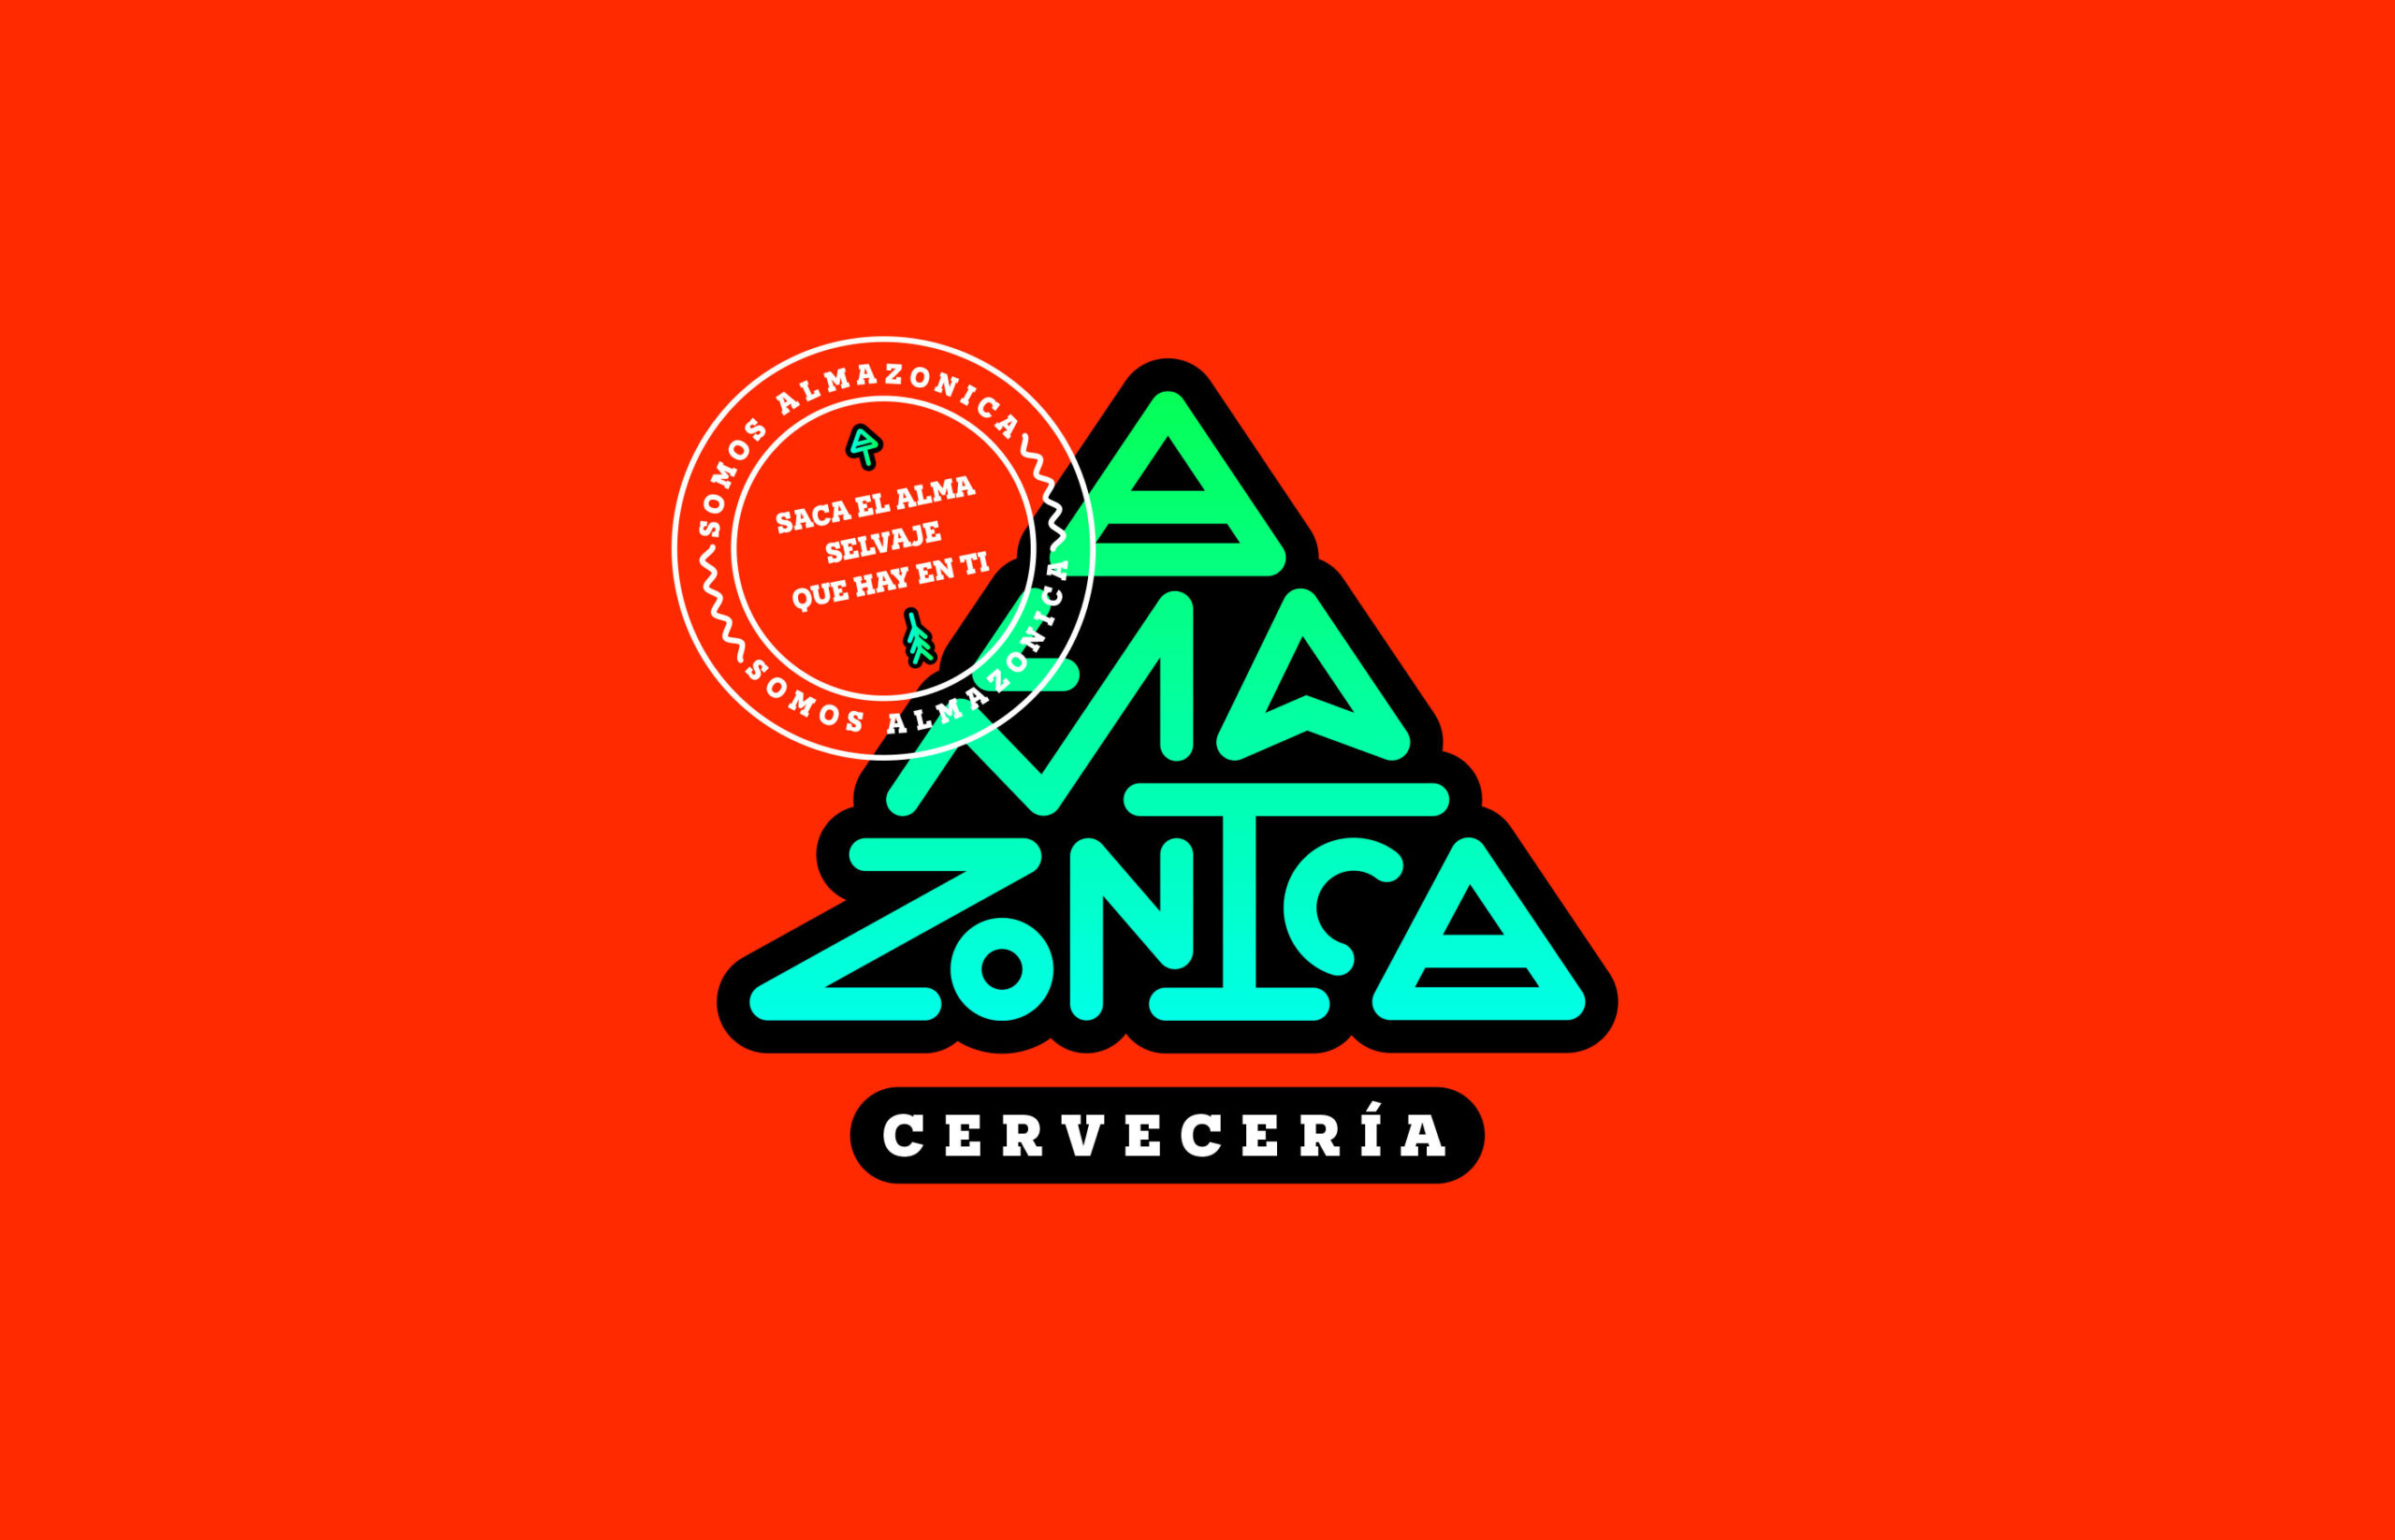 ALMA_Logo